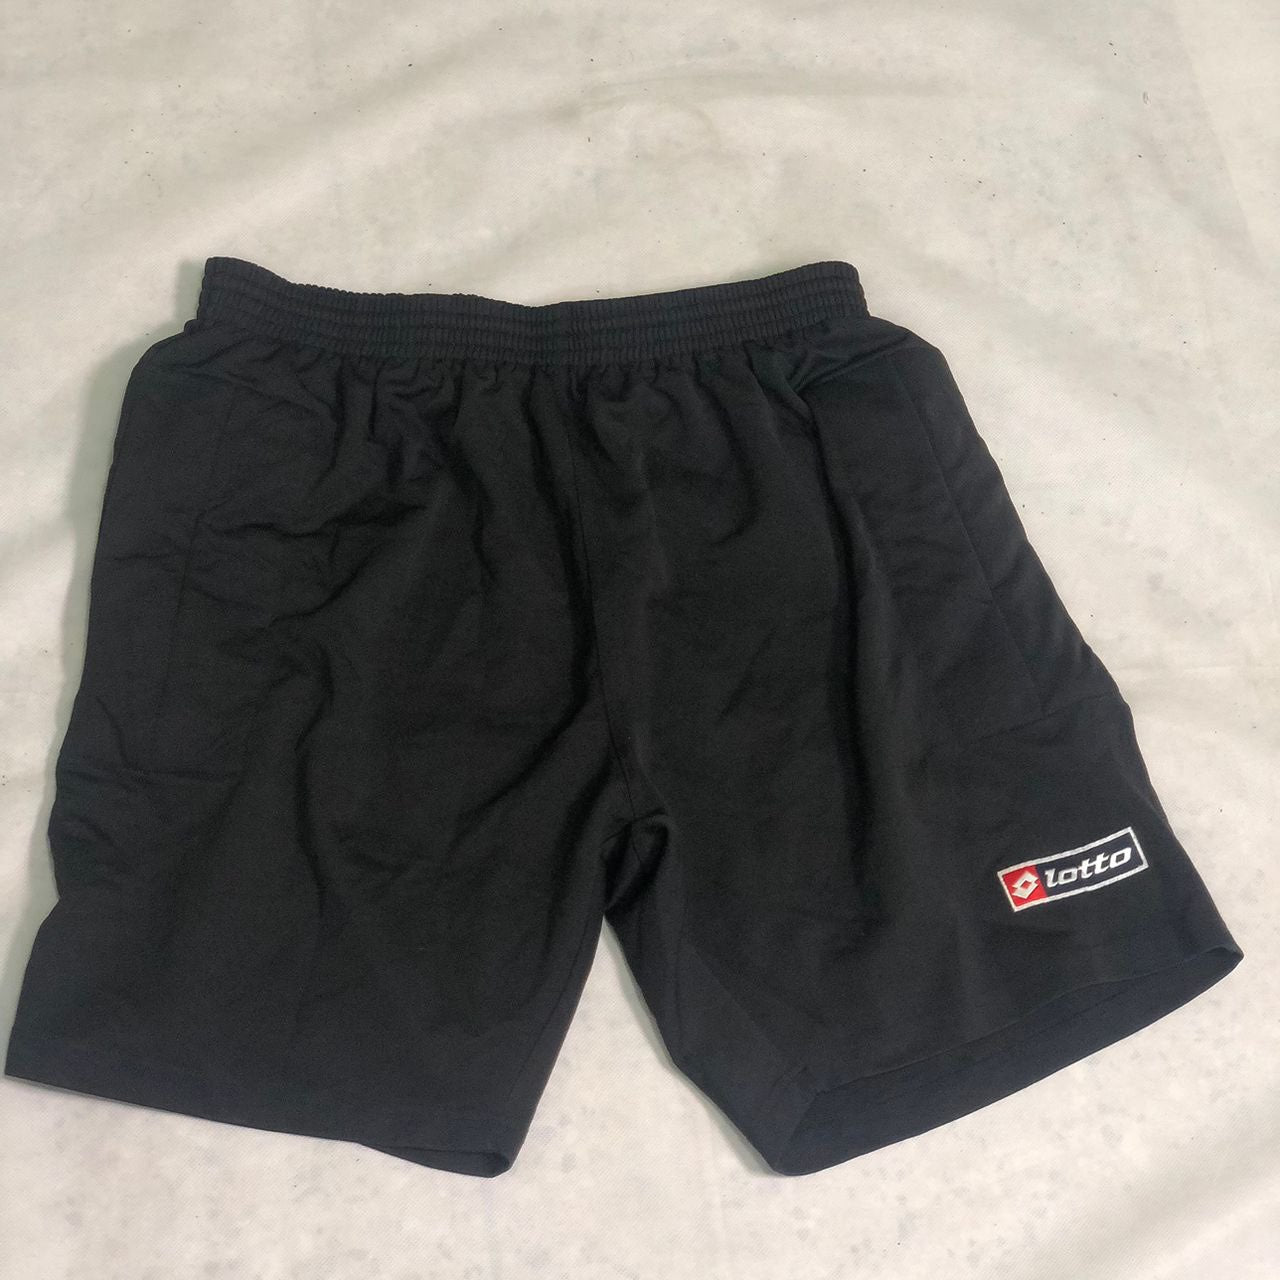 Branded Shorts 50 pc Bundle